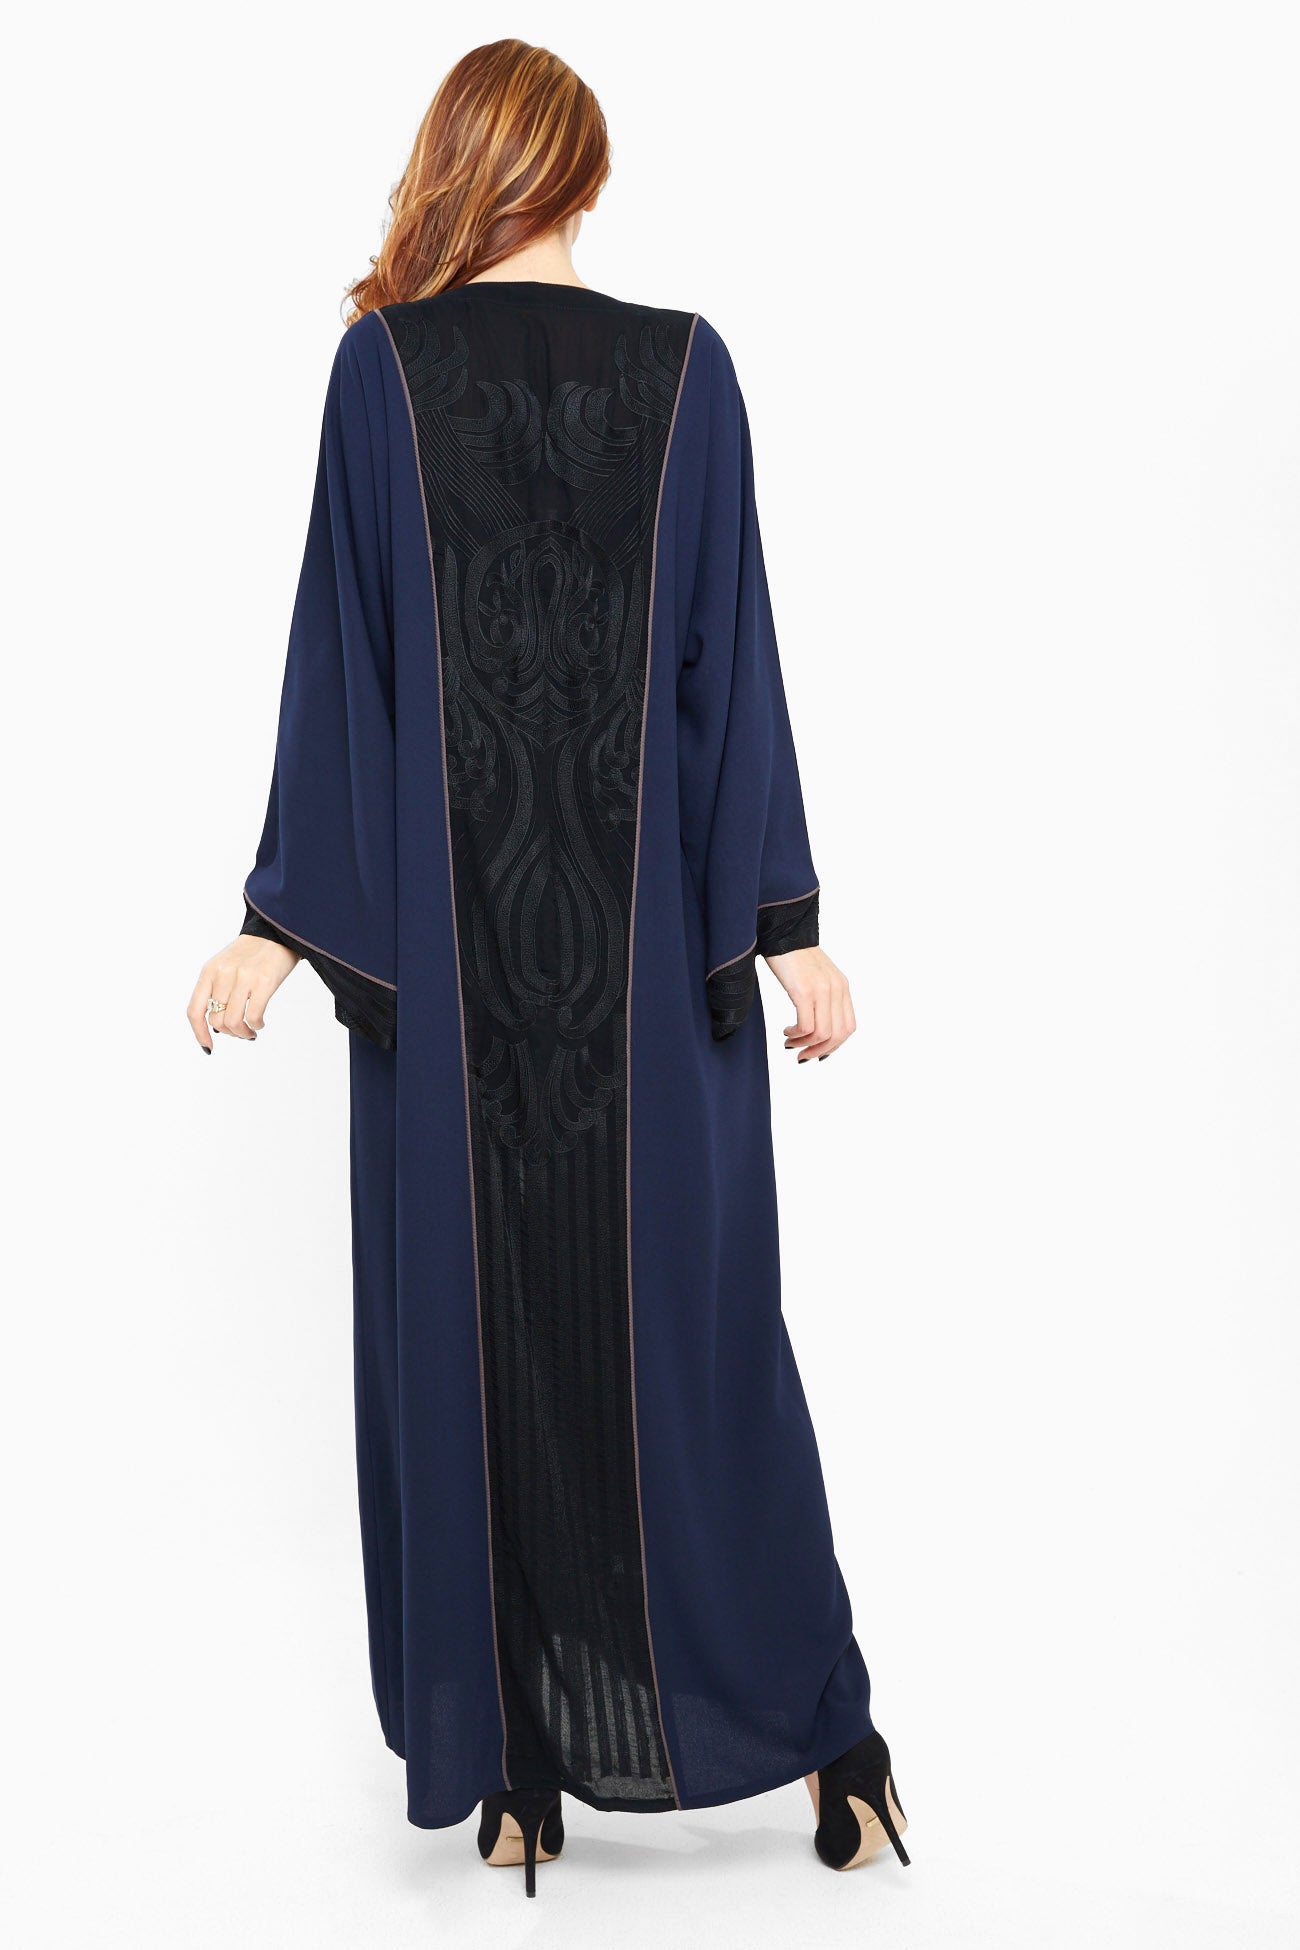 Dubai-made Nukhbaa brand Abaya a reflection of Dubai's luxury fashion scene-AJ418A